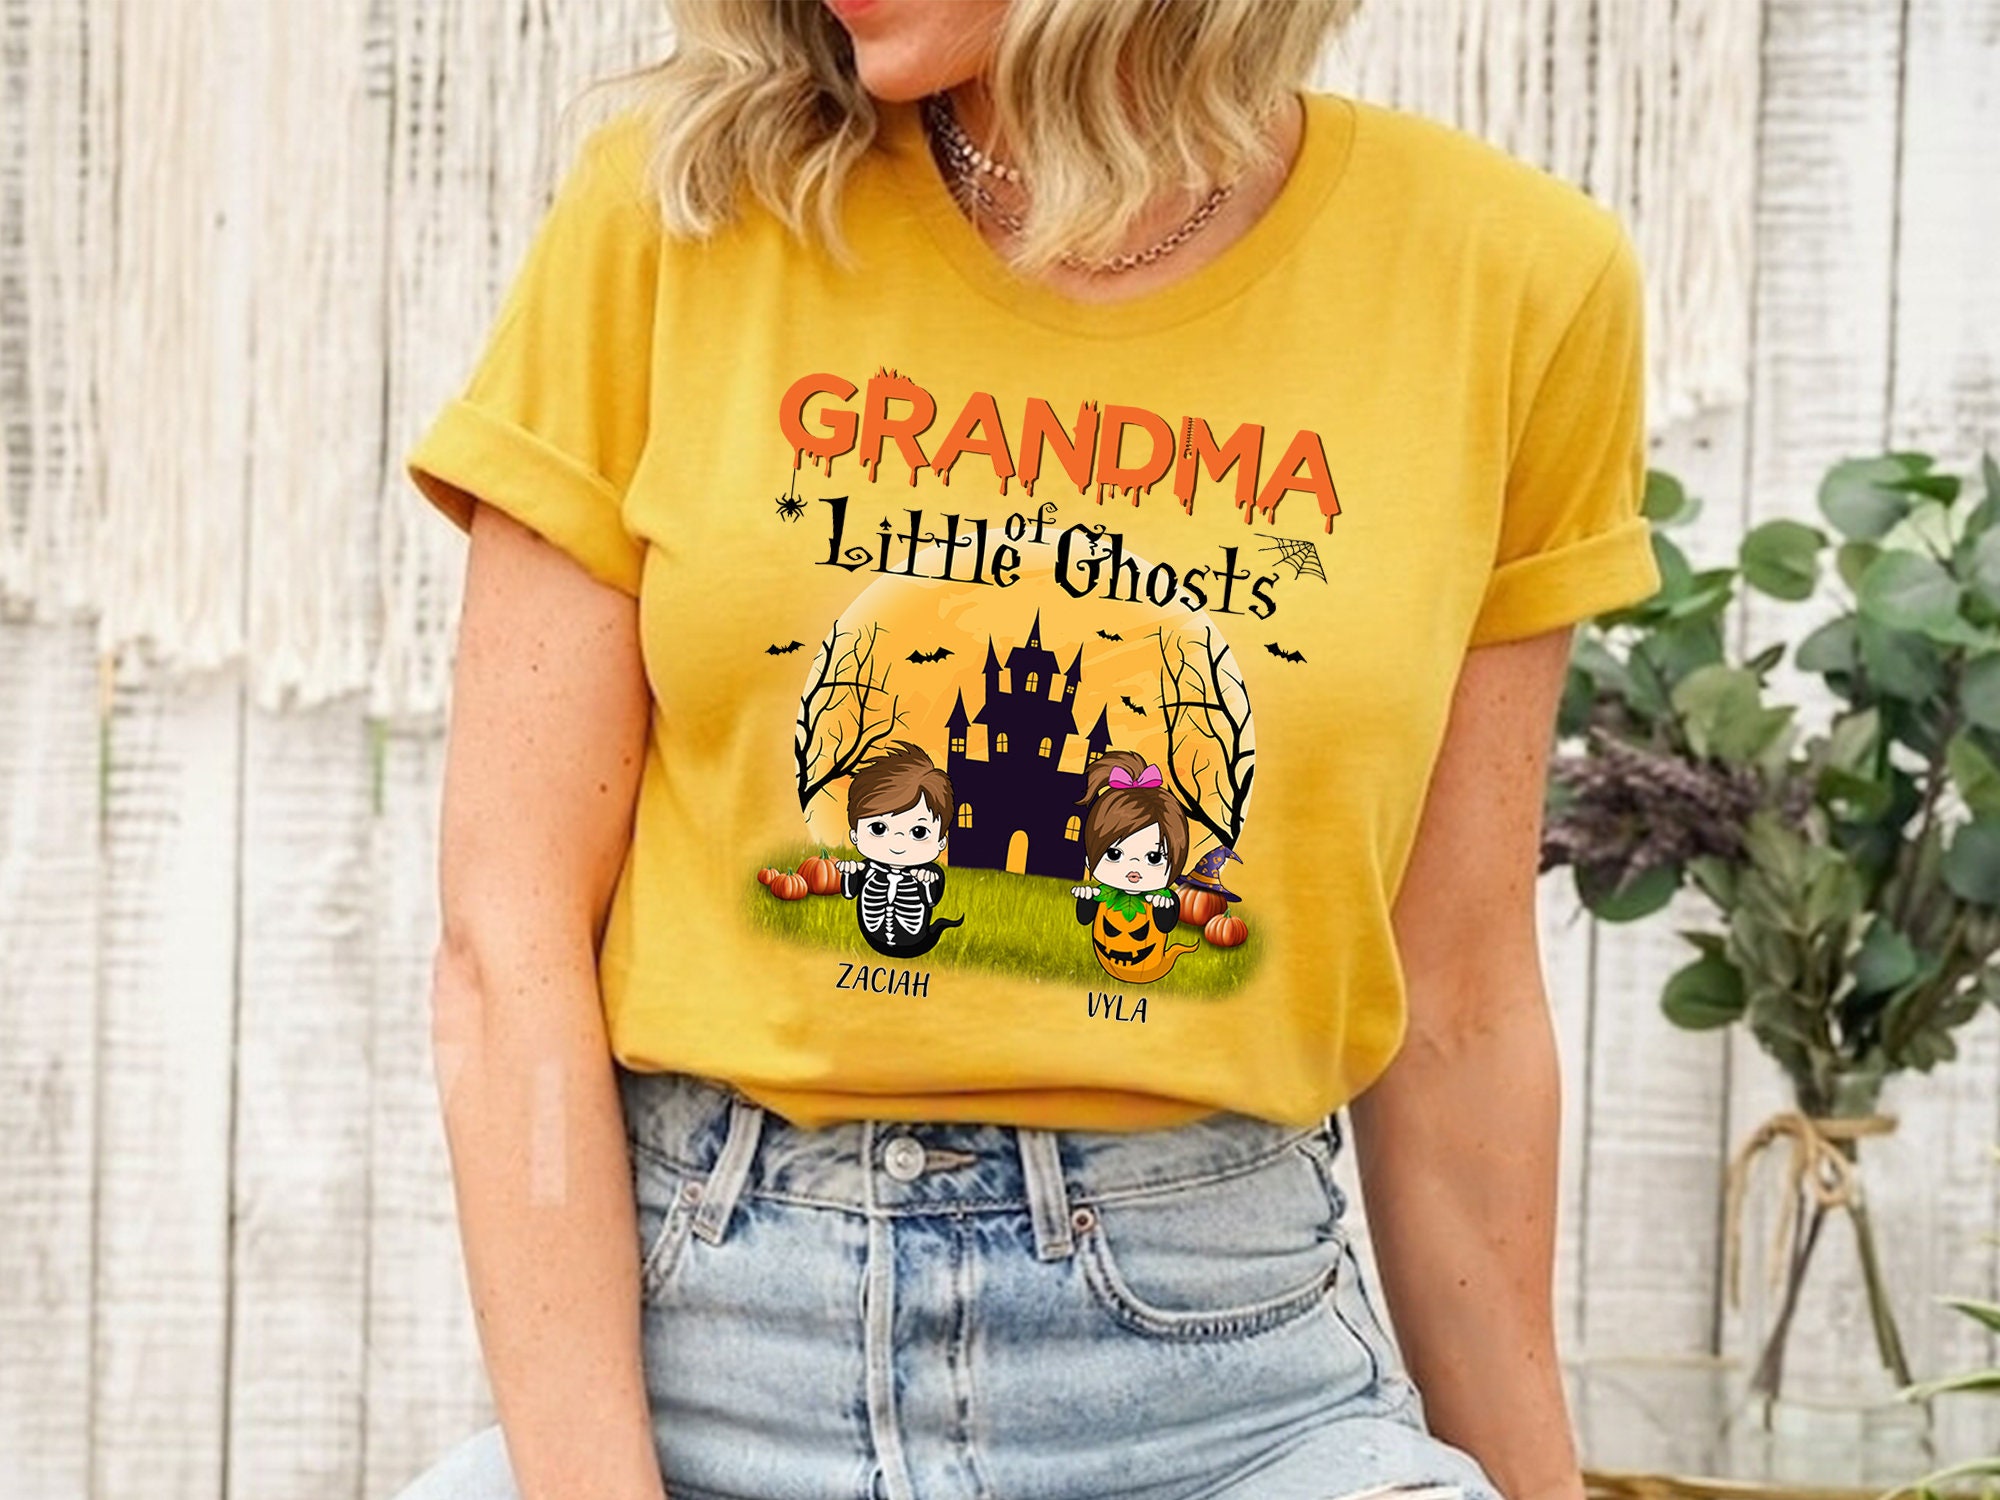 Discover Grandma Of Little Ghosts Shirt, Grandma Halloween Shirt, Custom Grandkids Shirt, Nana Mimi Halloween Shirt, Grandma With Grandkids Shirt